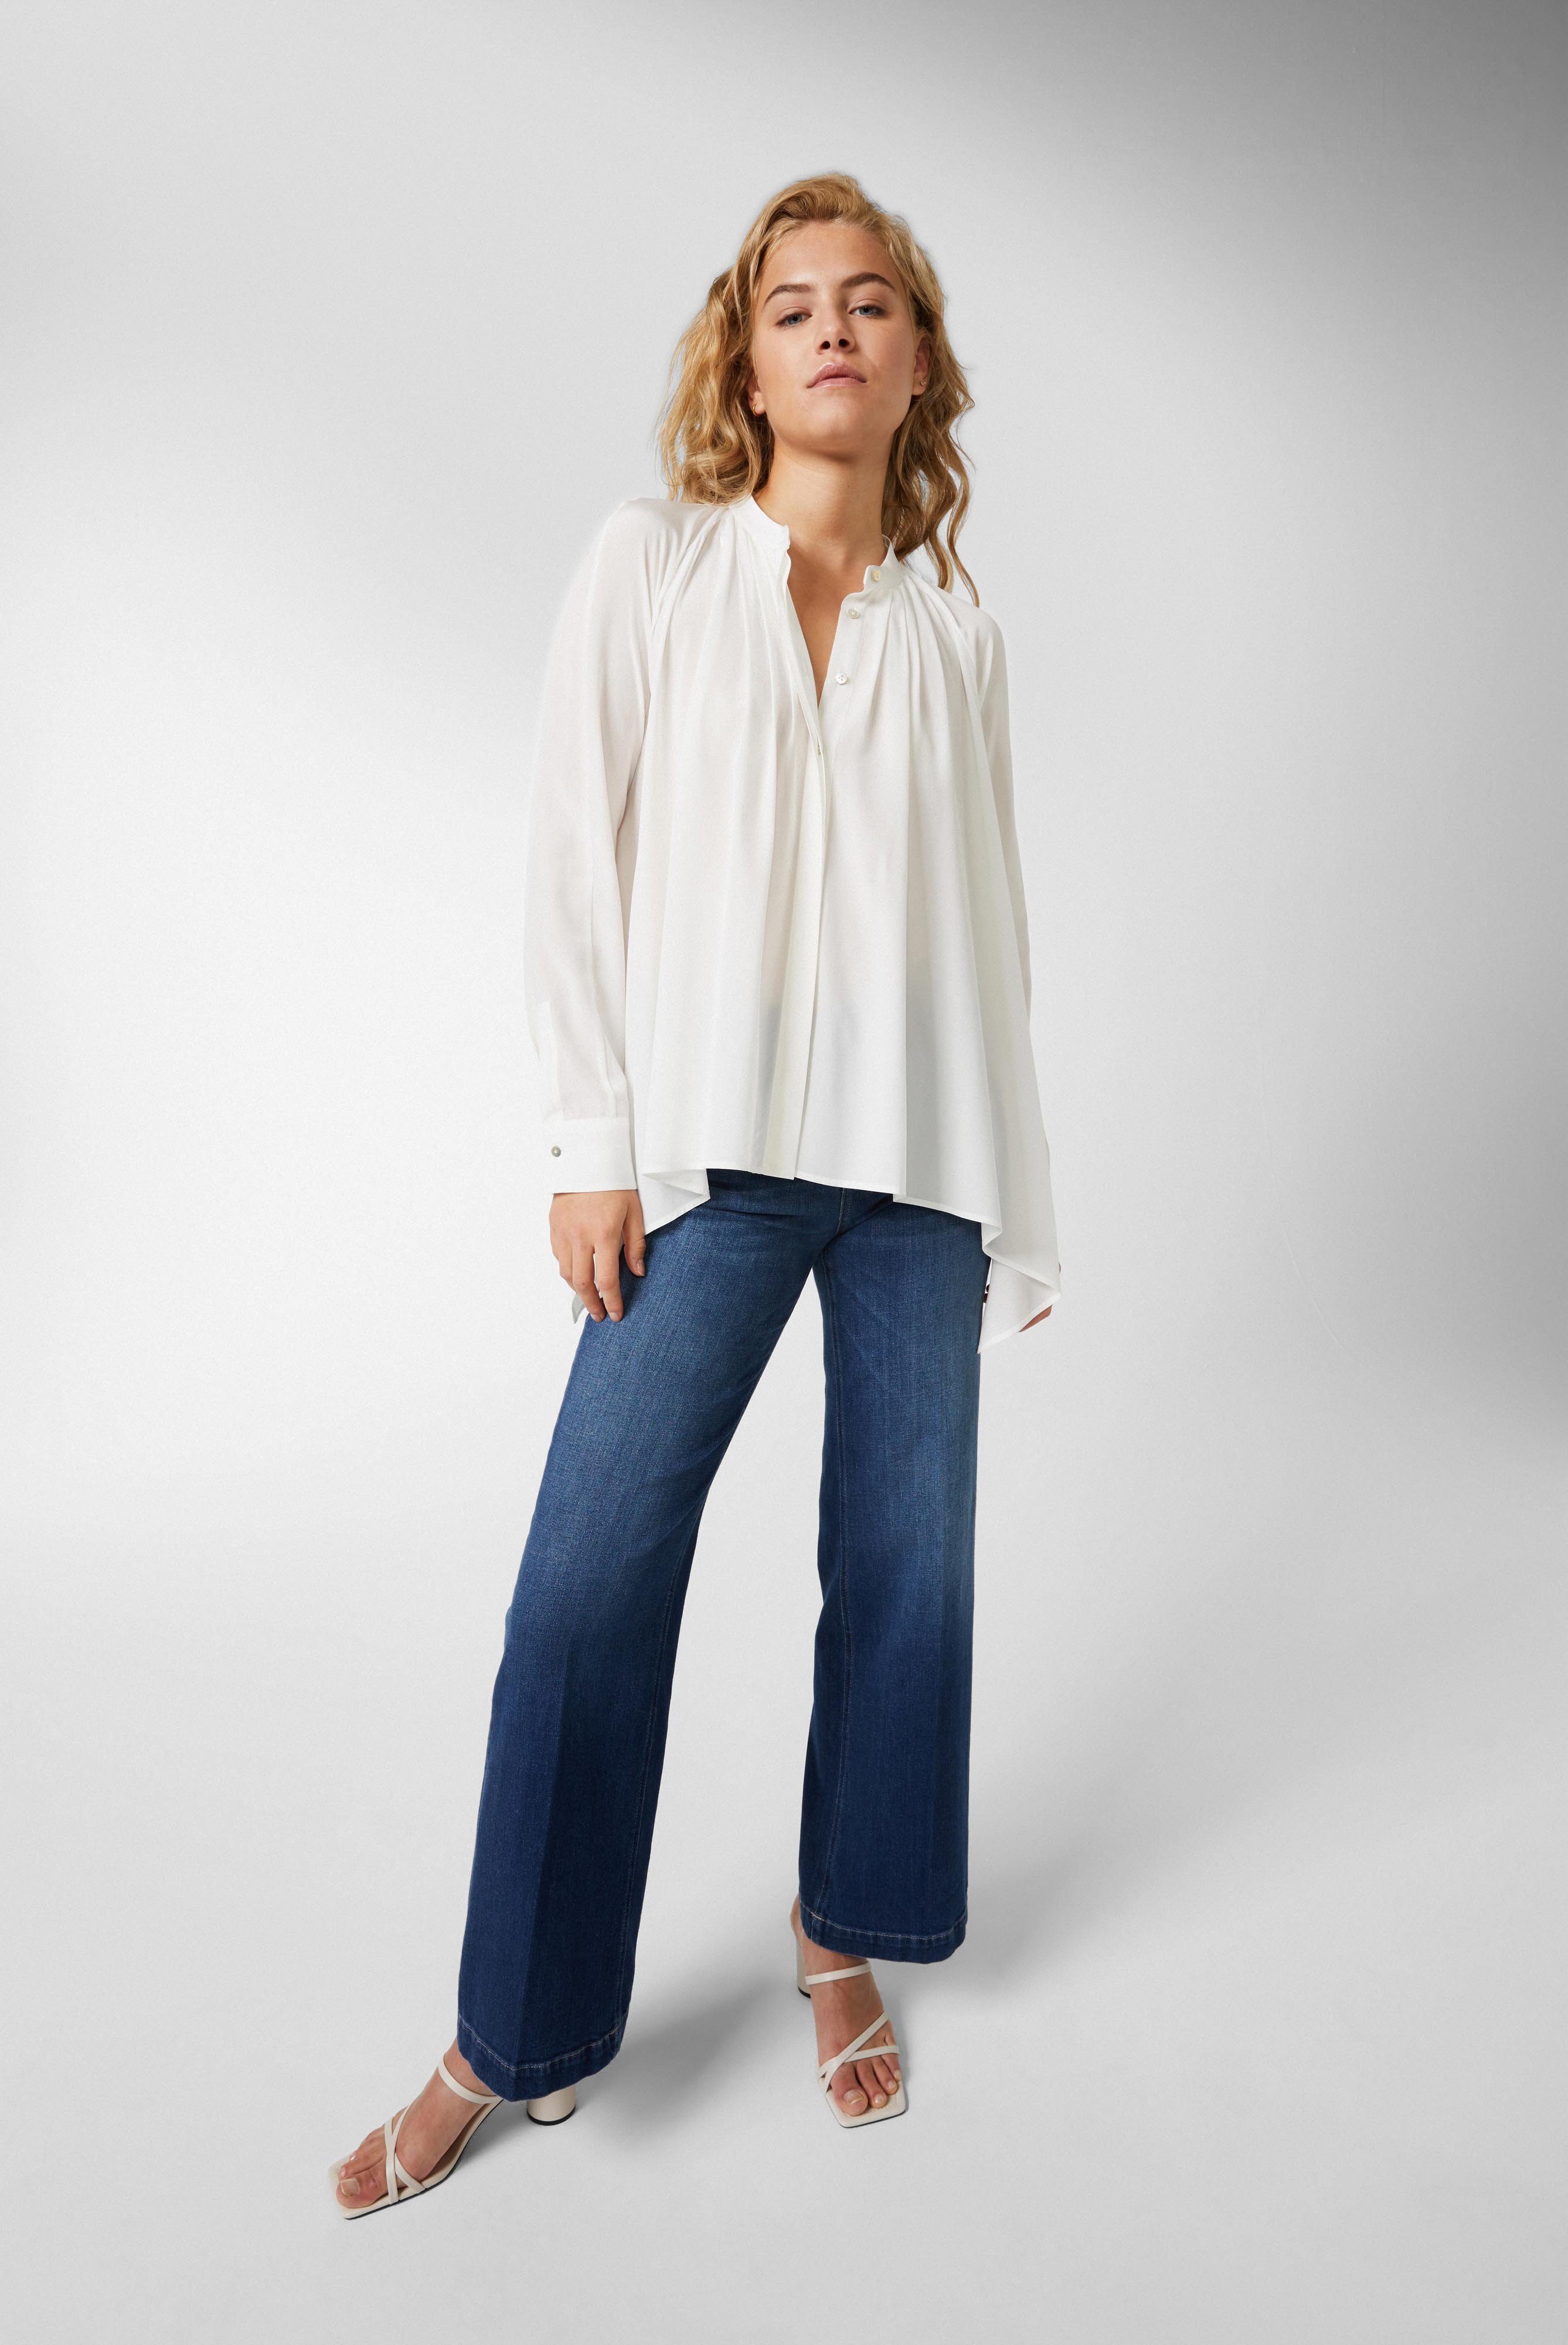 Meisterwerk Blouses+Crepe blouse with asymmetric hem white+05.525P.07.155553.105.40